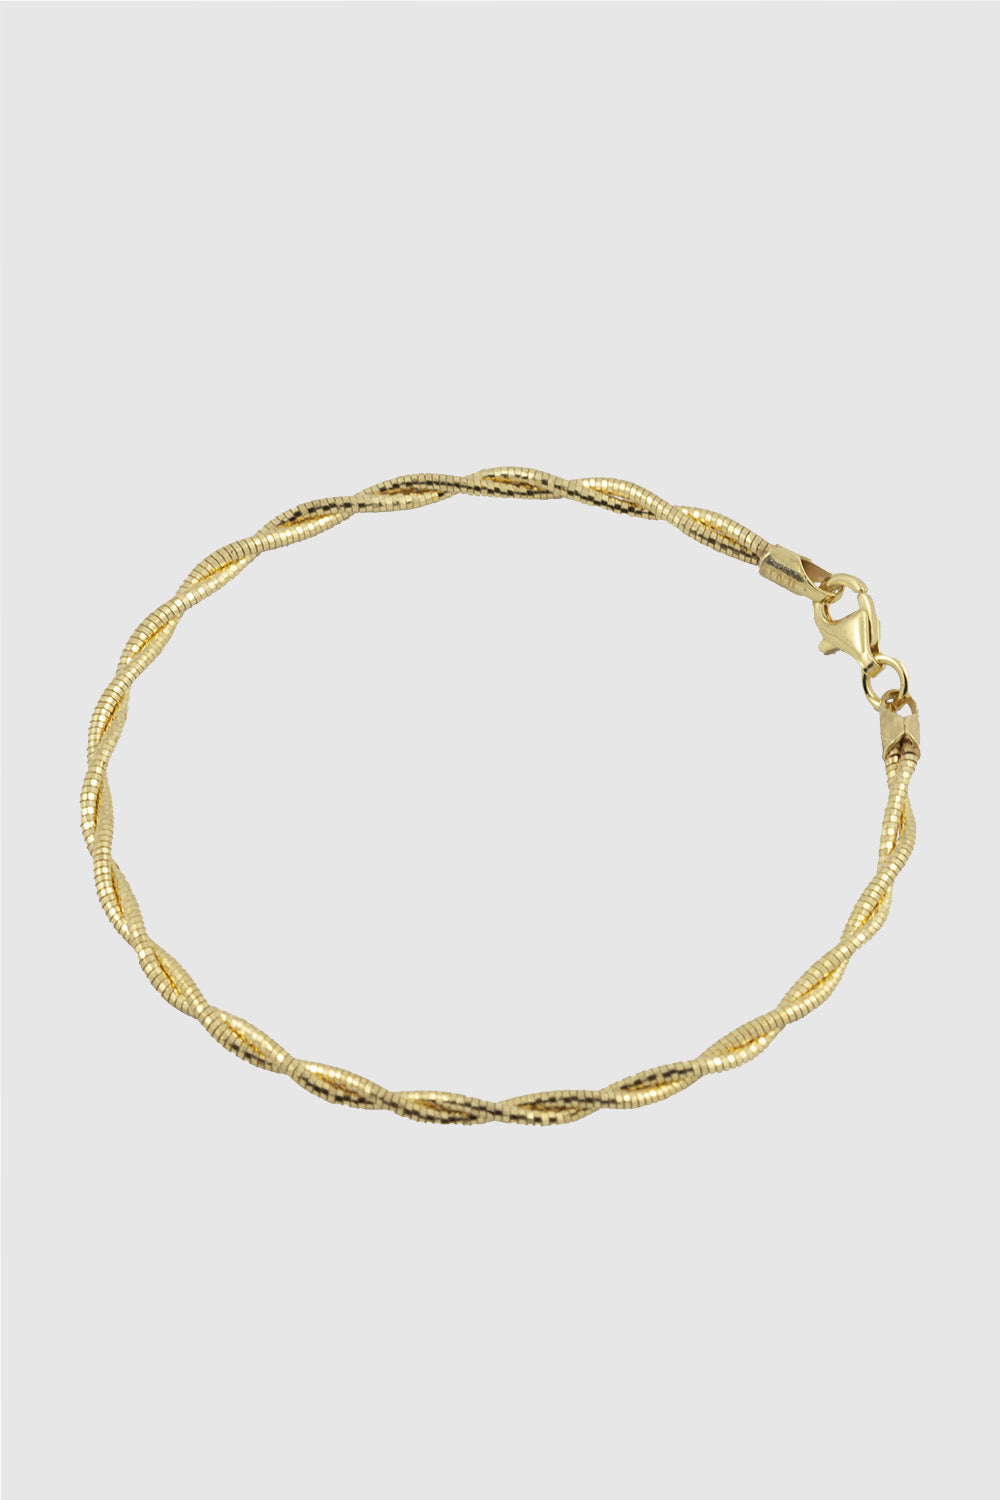 Braided twist gold bracelet